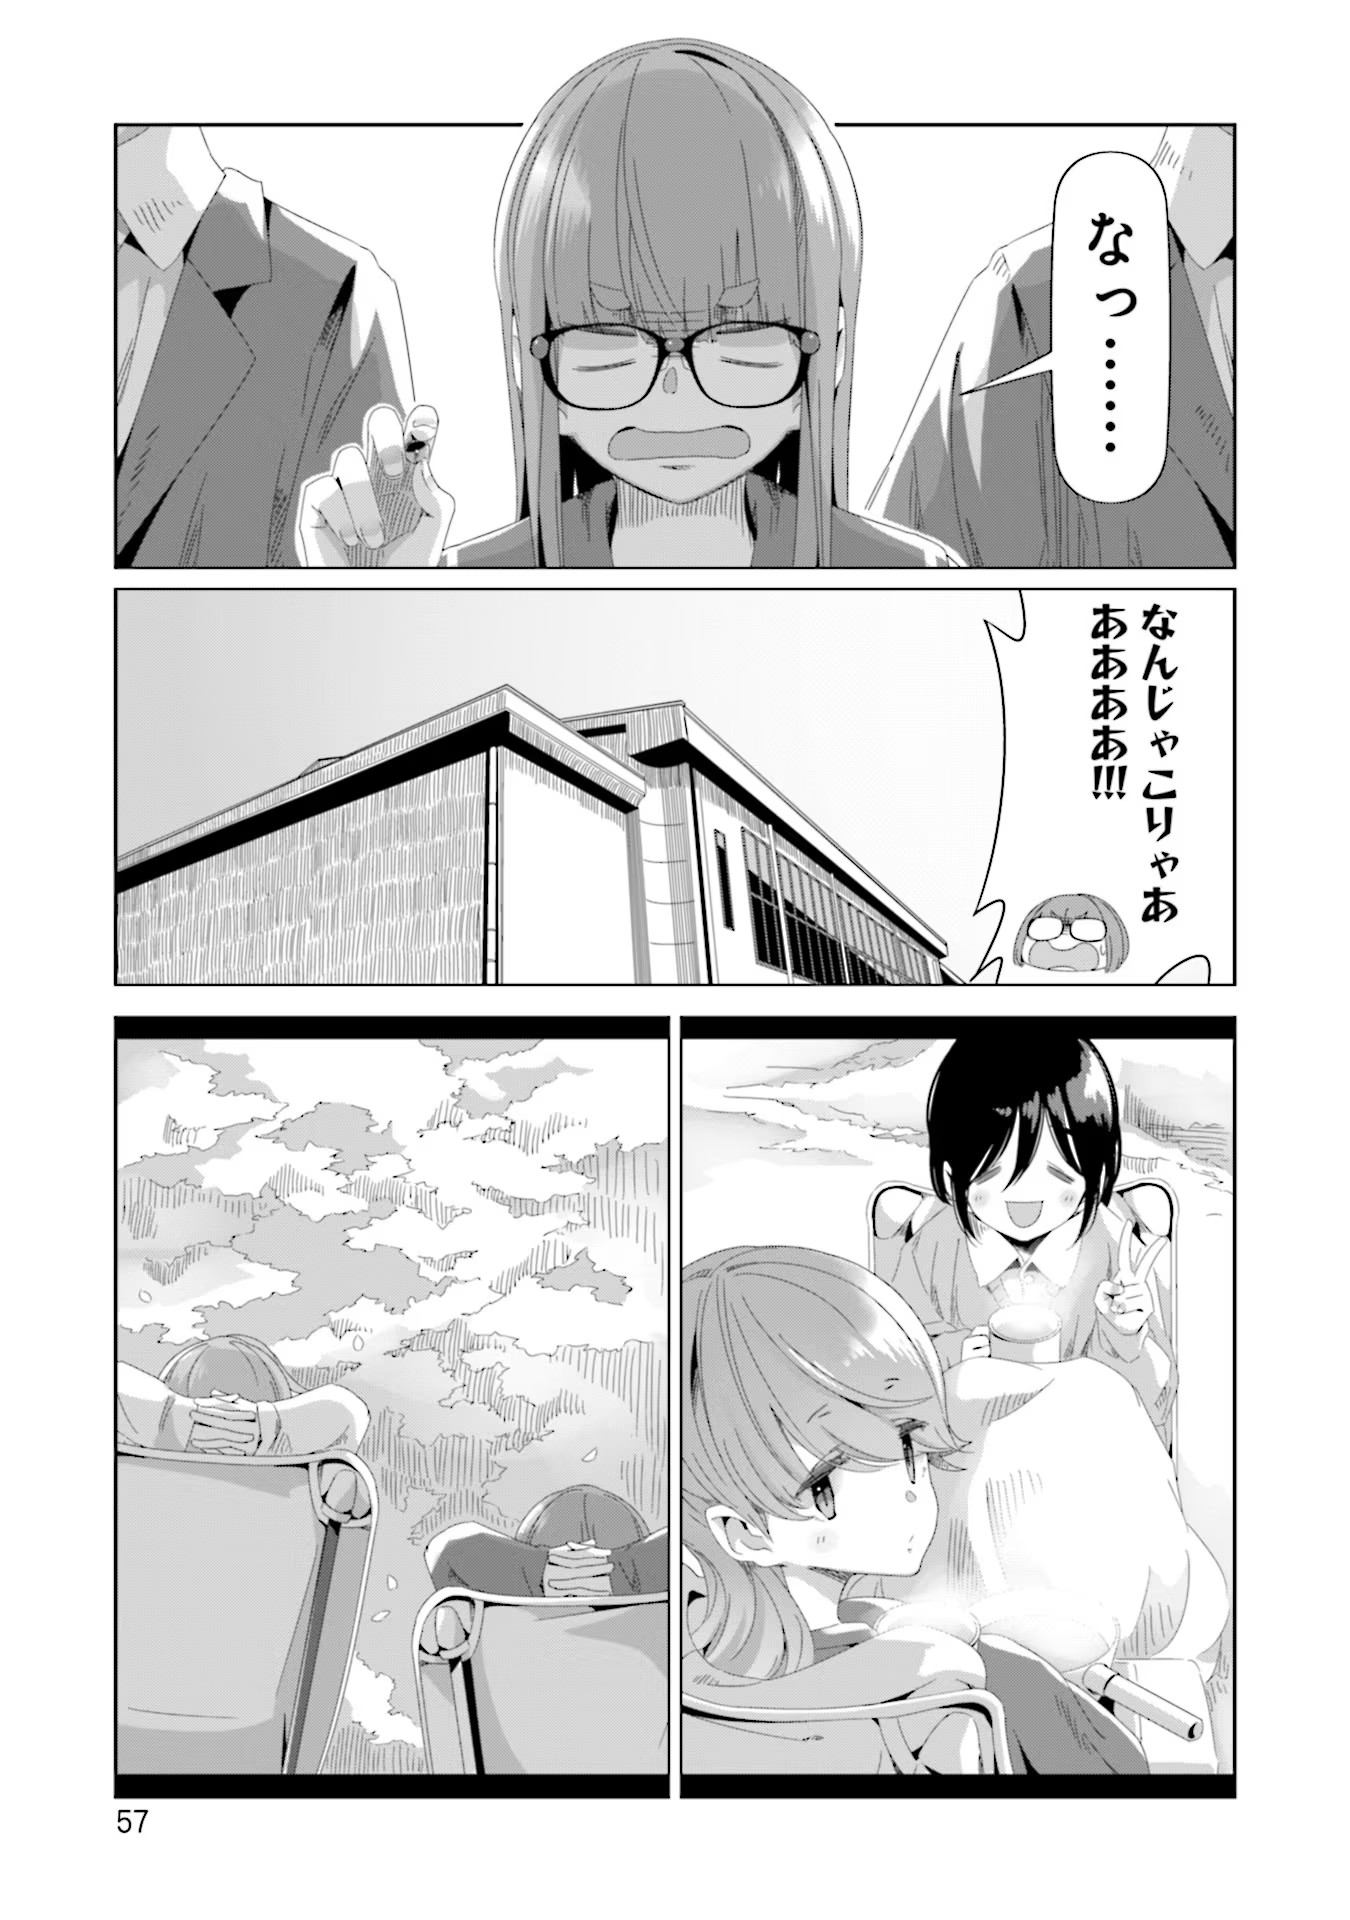 Yuru Camp - Chapter 78 - Page 3